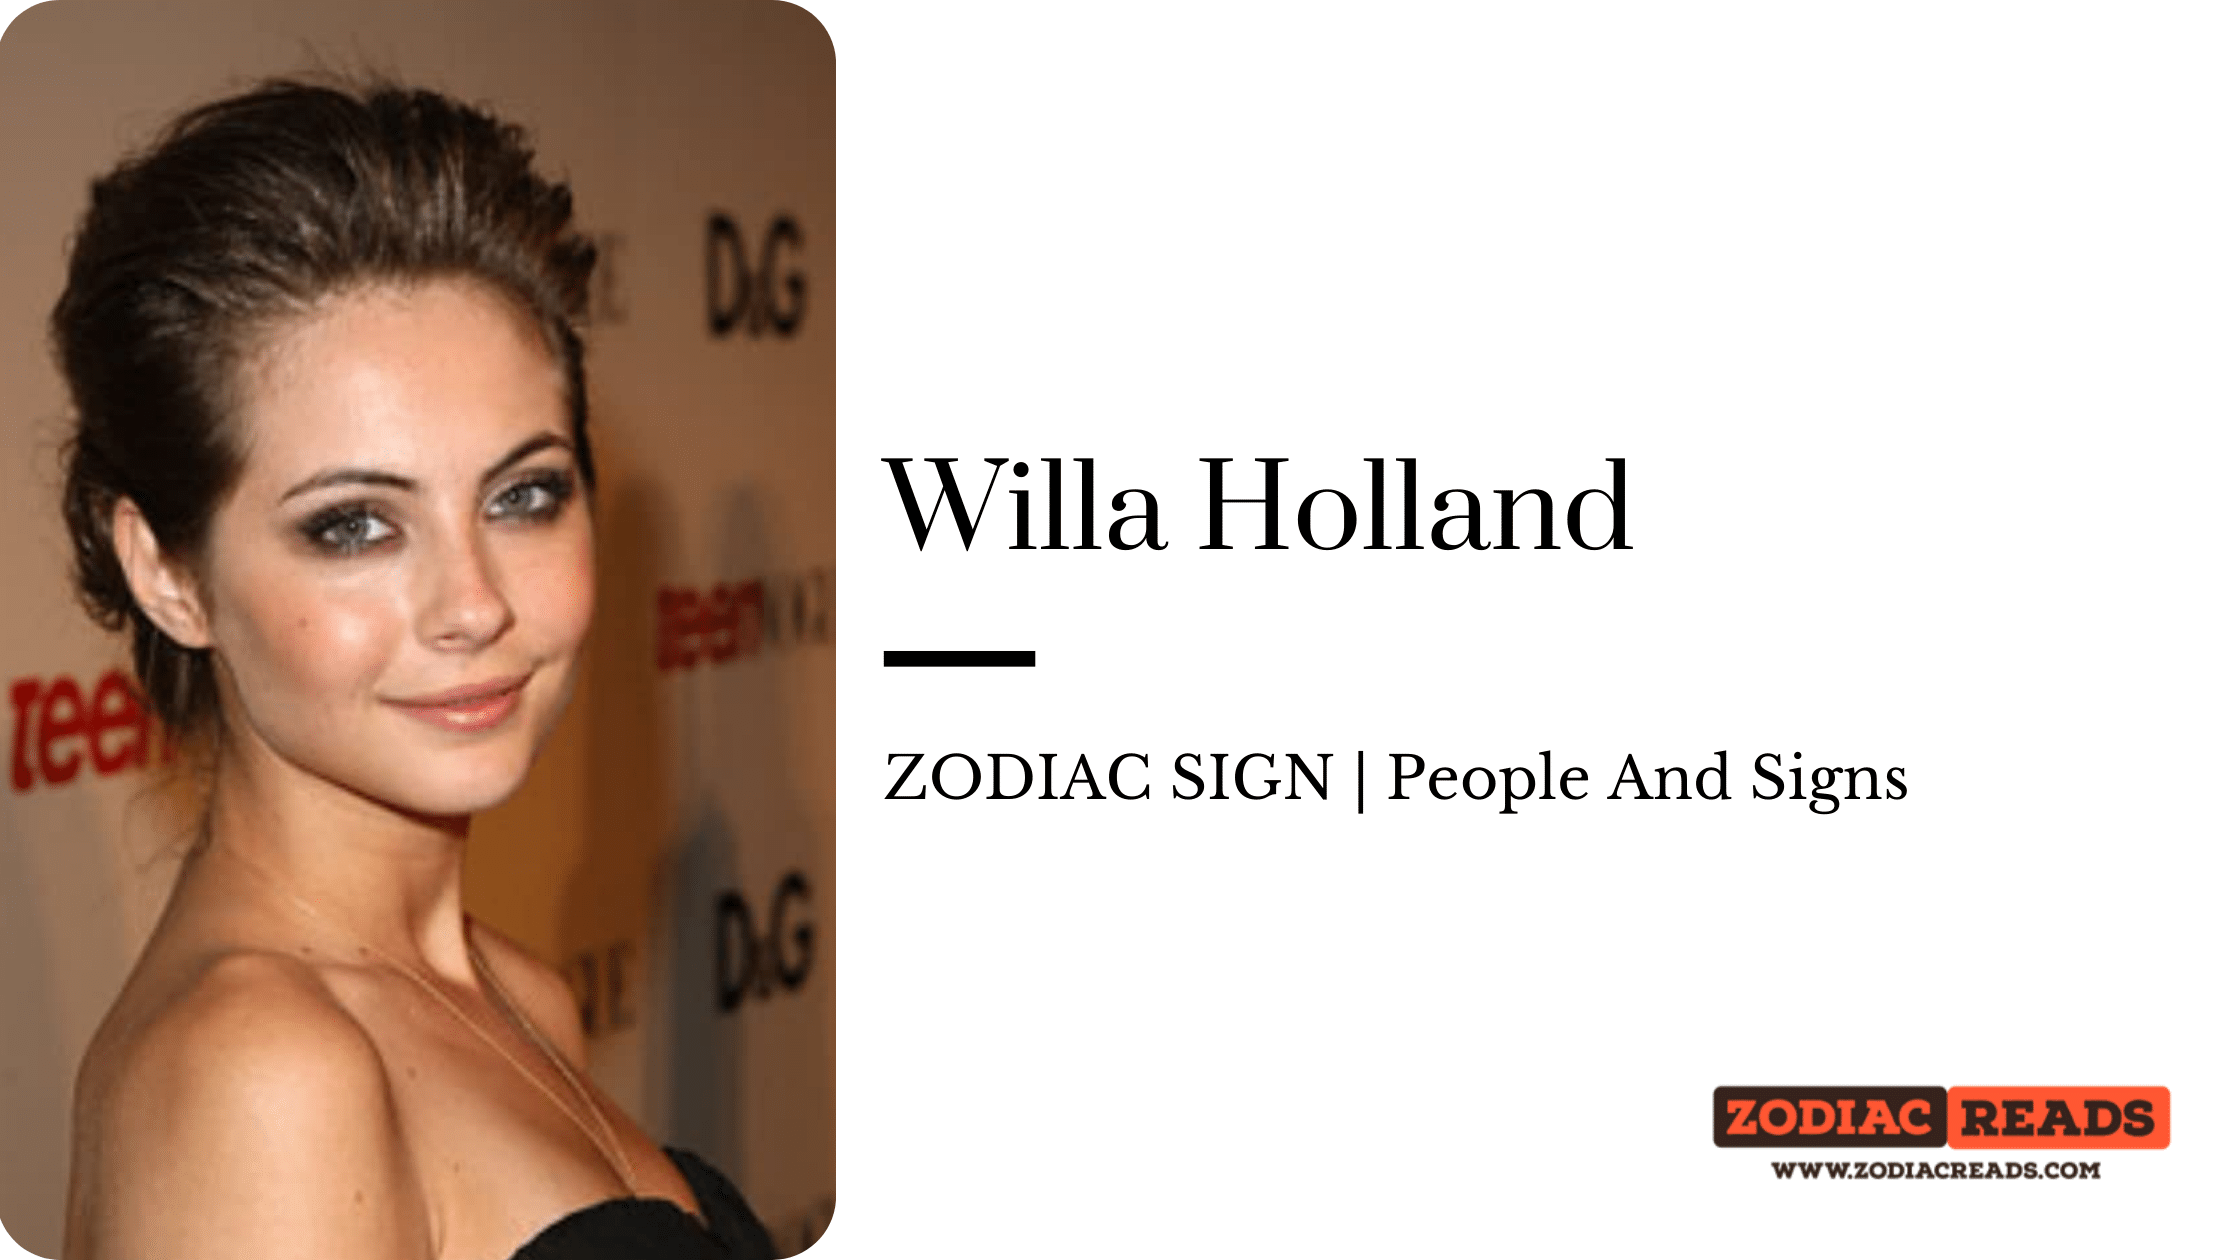 Willa Holland zodiac